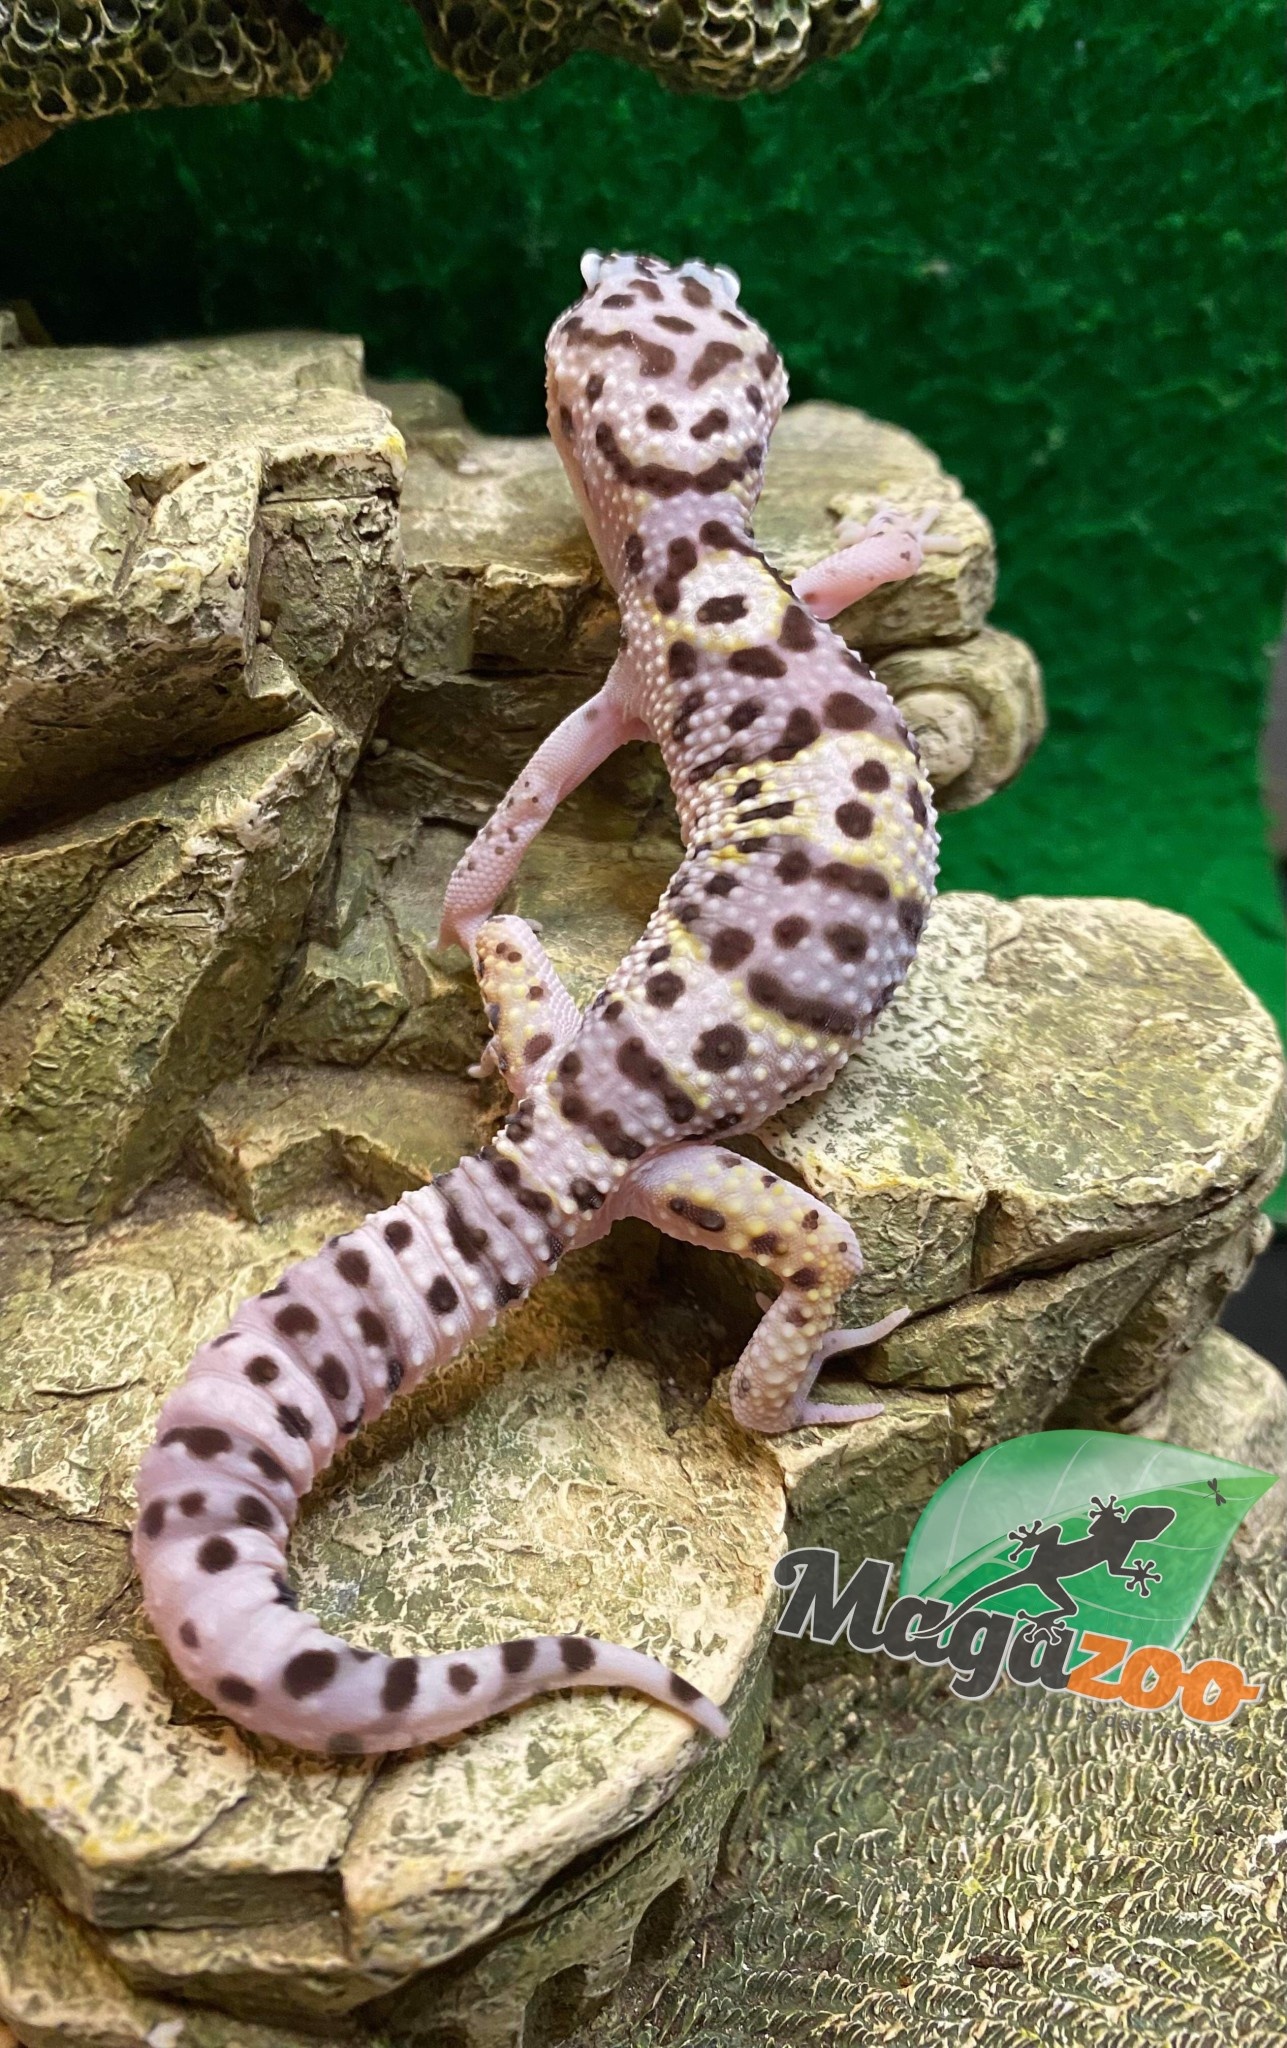 Magazoo Gecko léopard Mack snow white and yellow Mâle 14/6/23  #24  (EN COMMANDE SPÉCIAL)